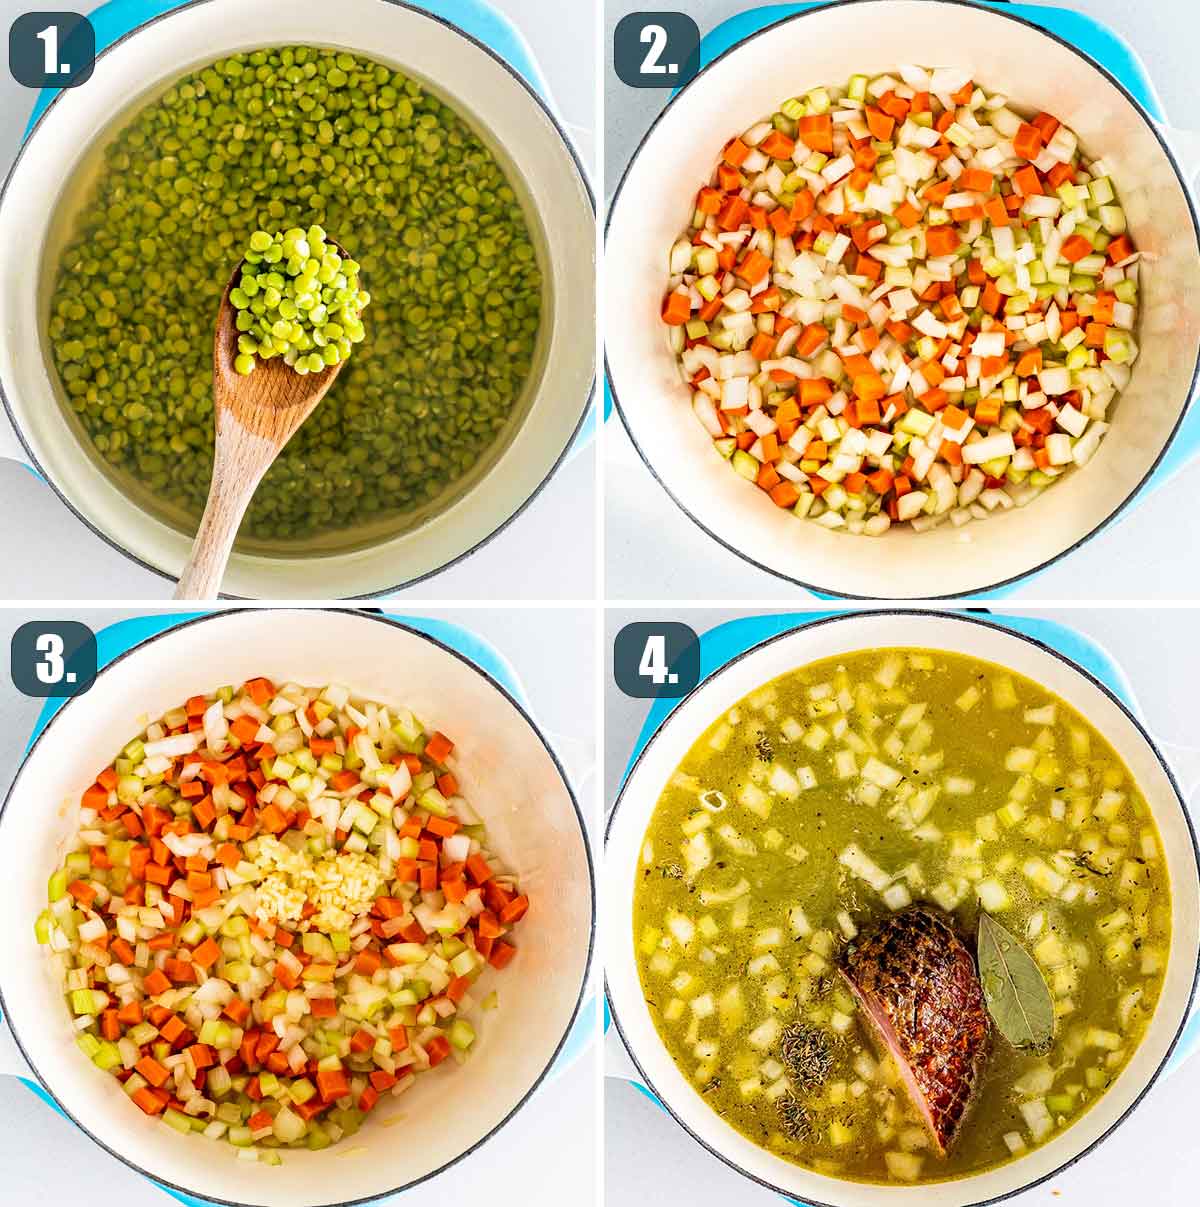 process shots showing how to make split pea soup.